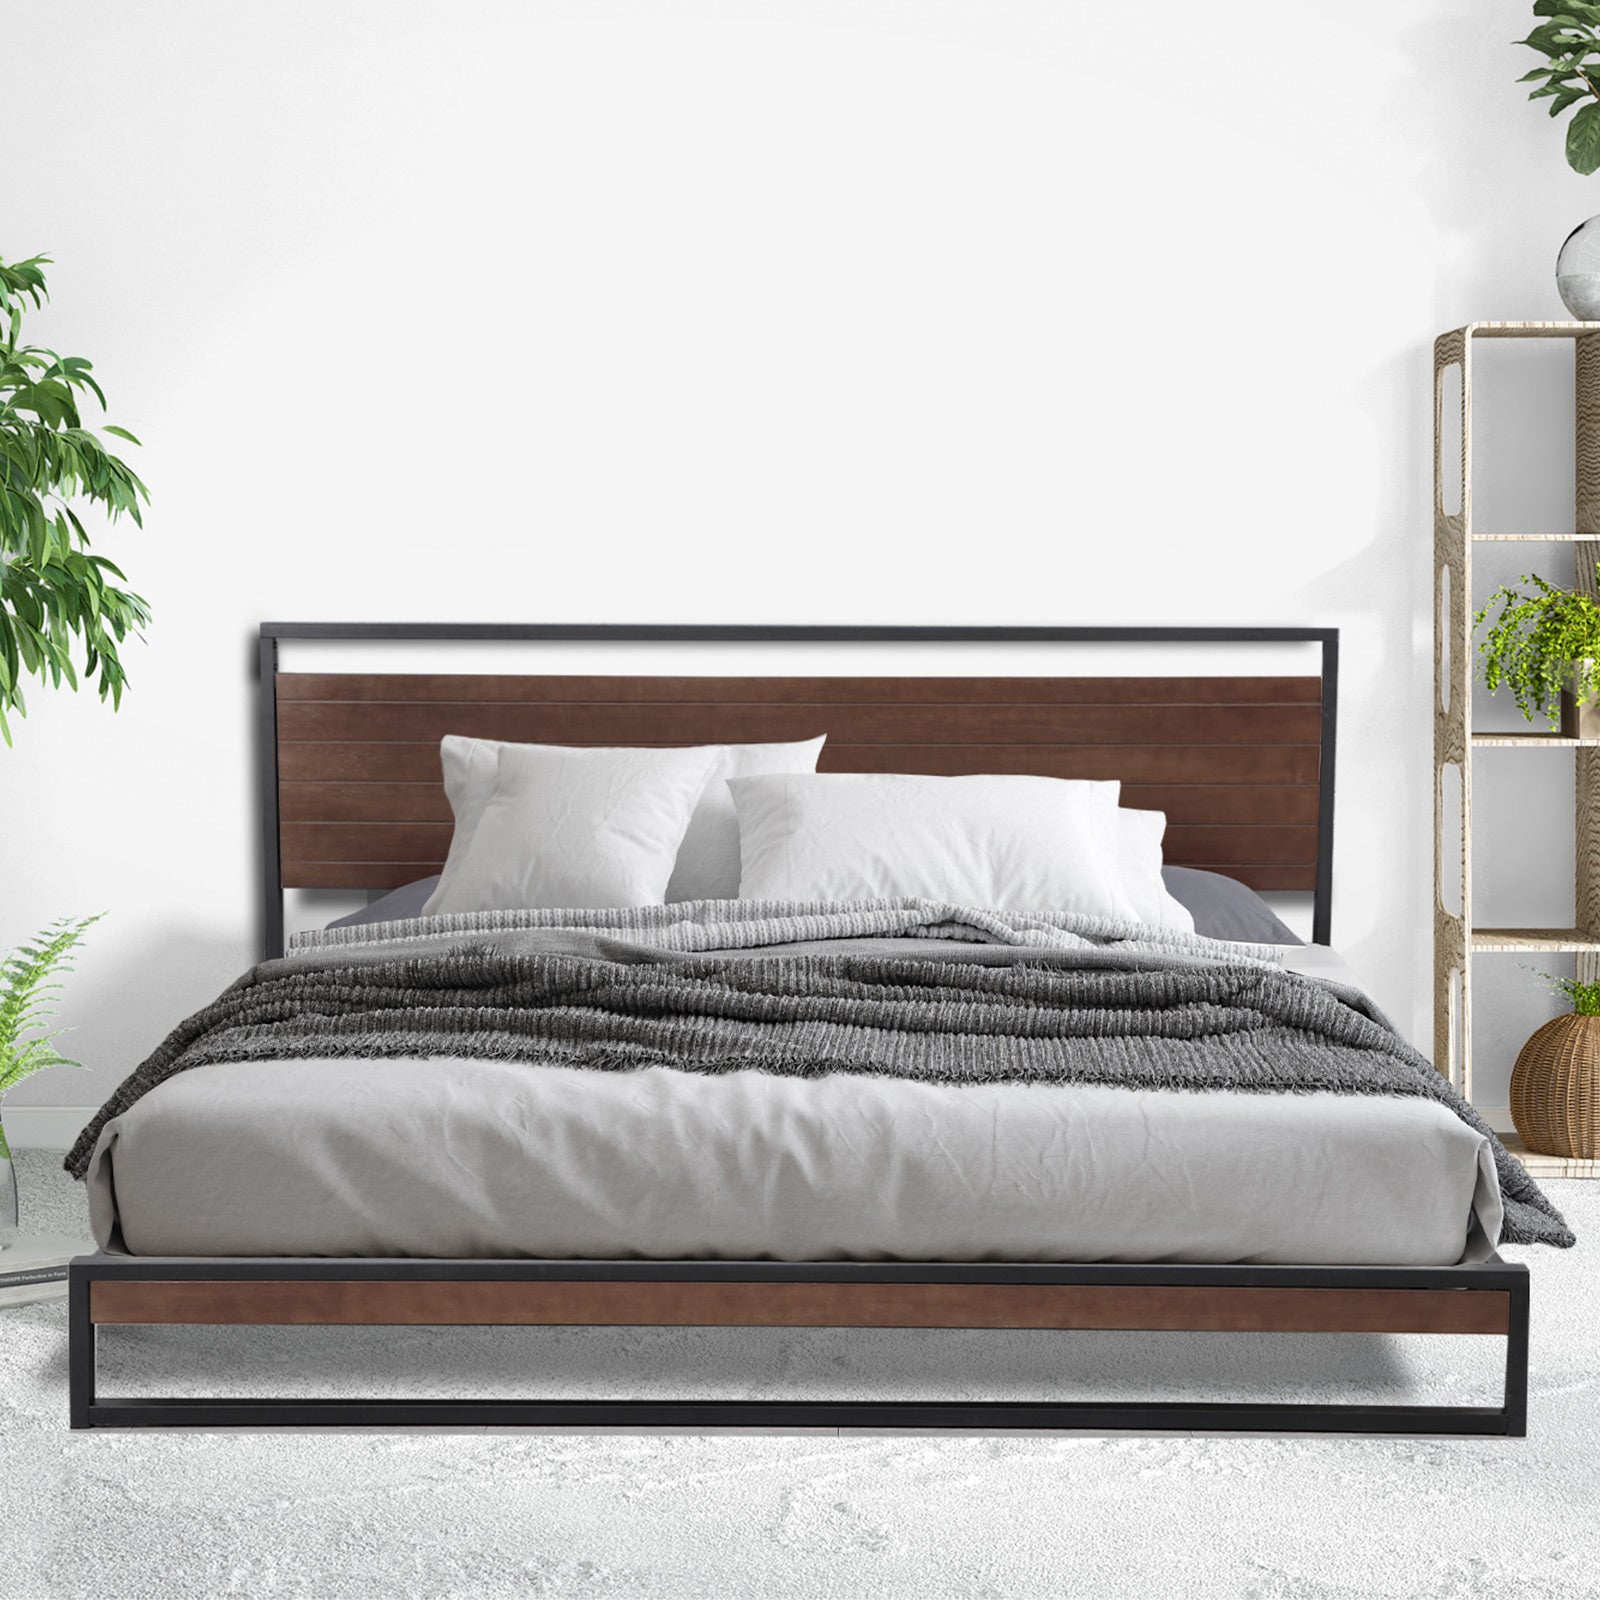 Milano Decor Azure Bed Frame with Headboard – Black - Single